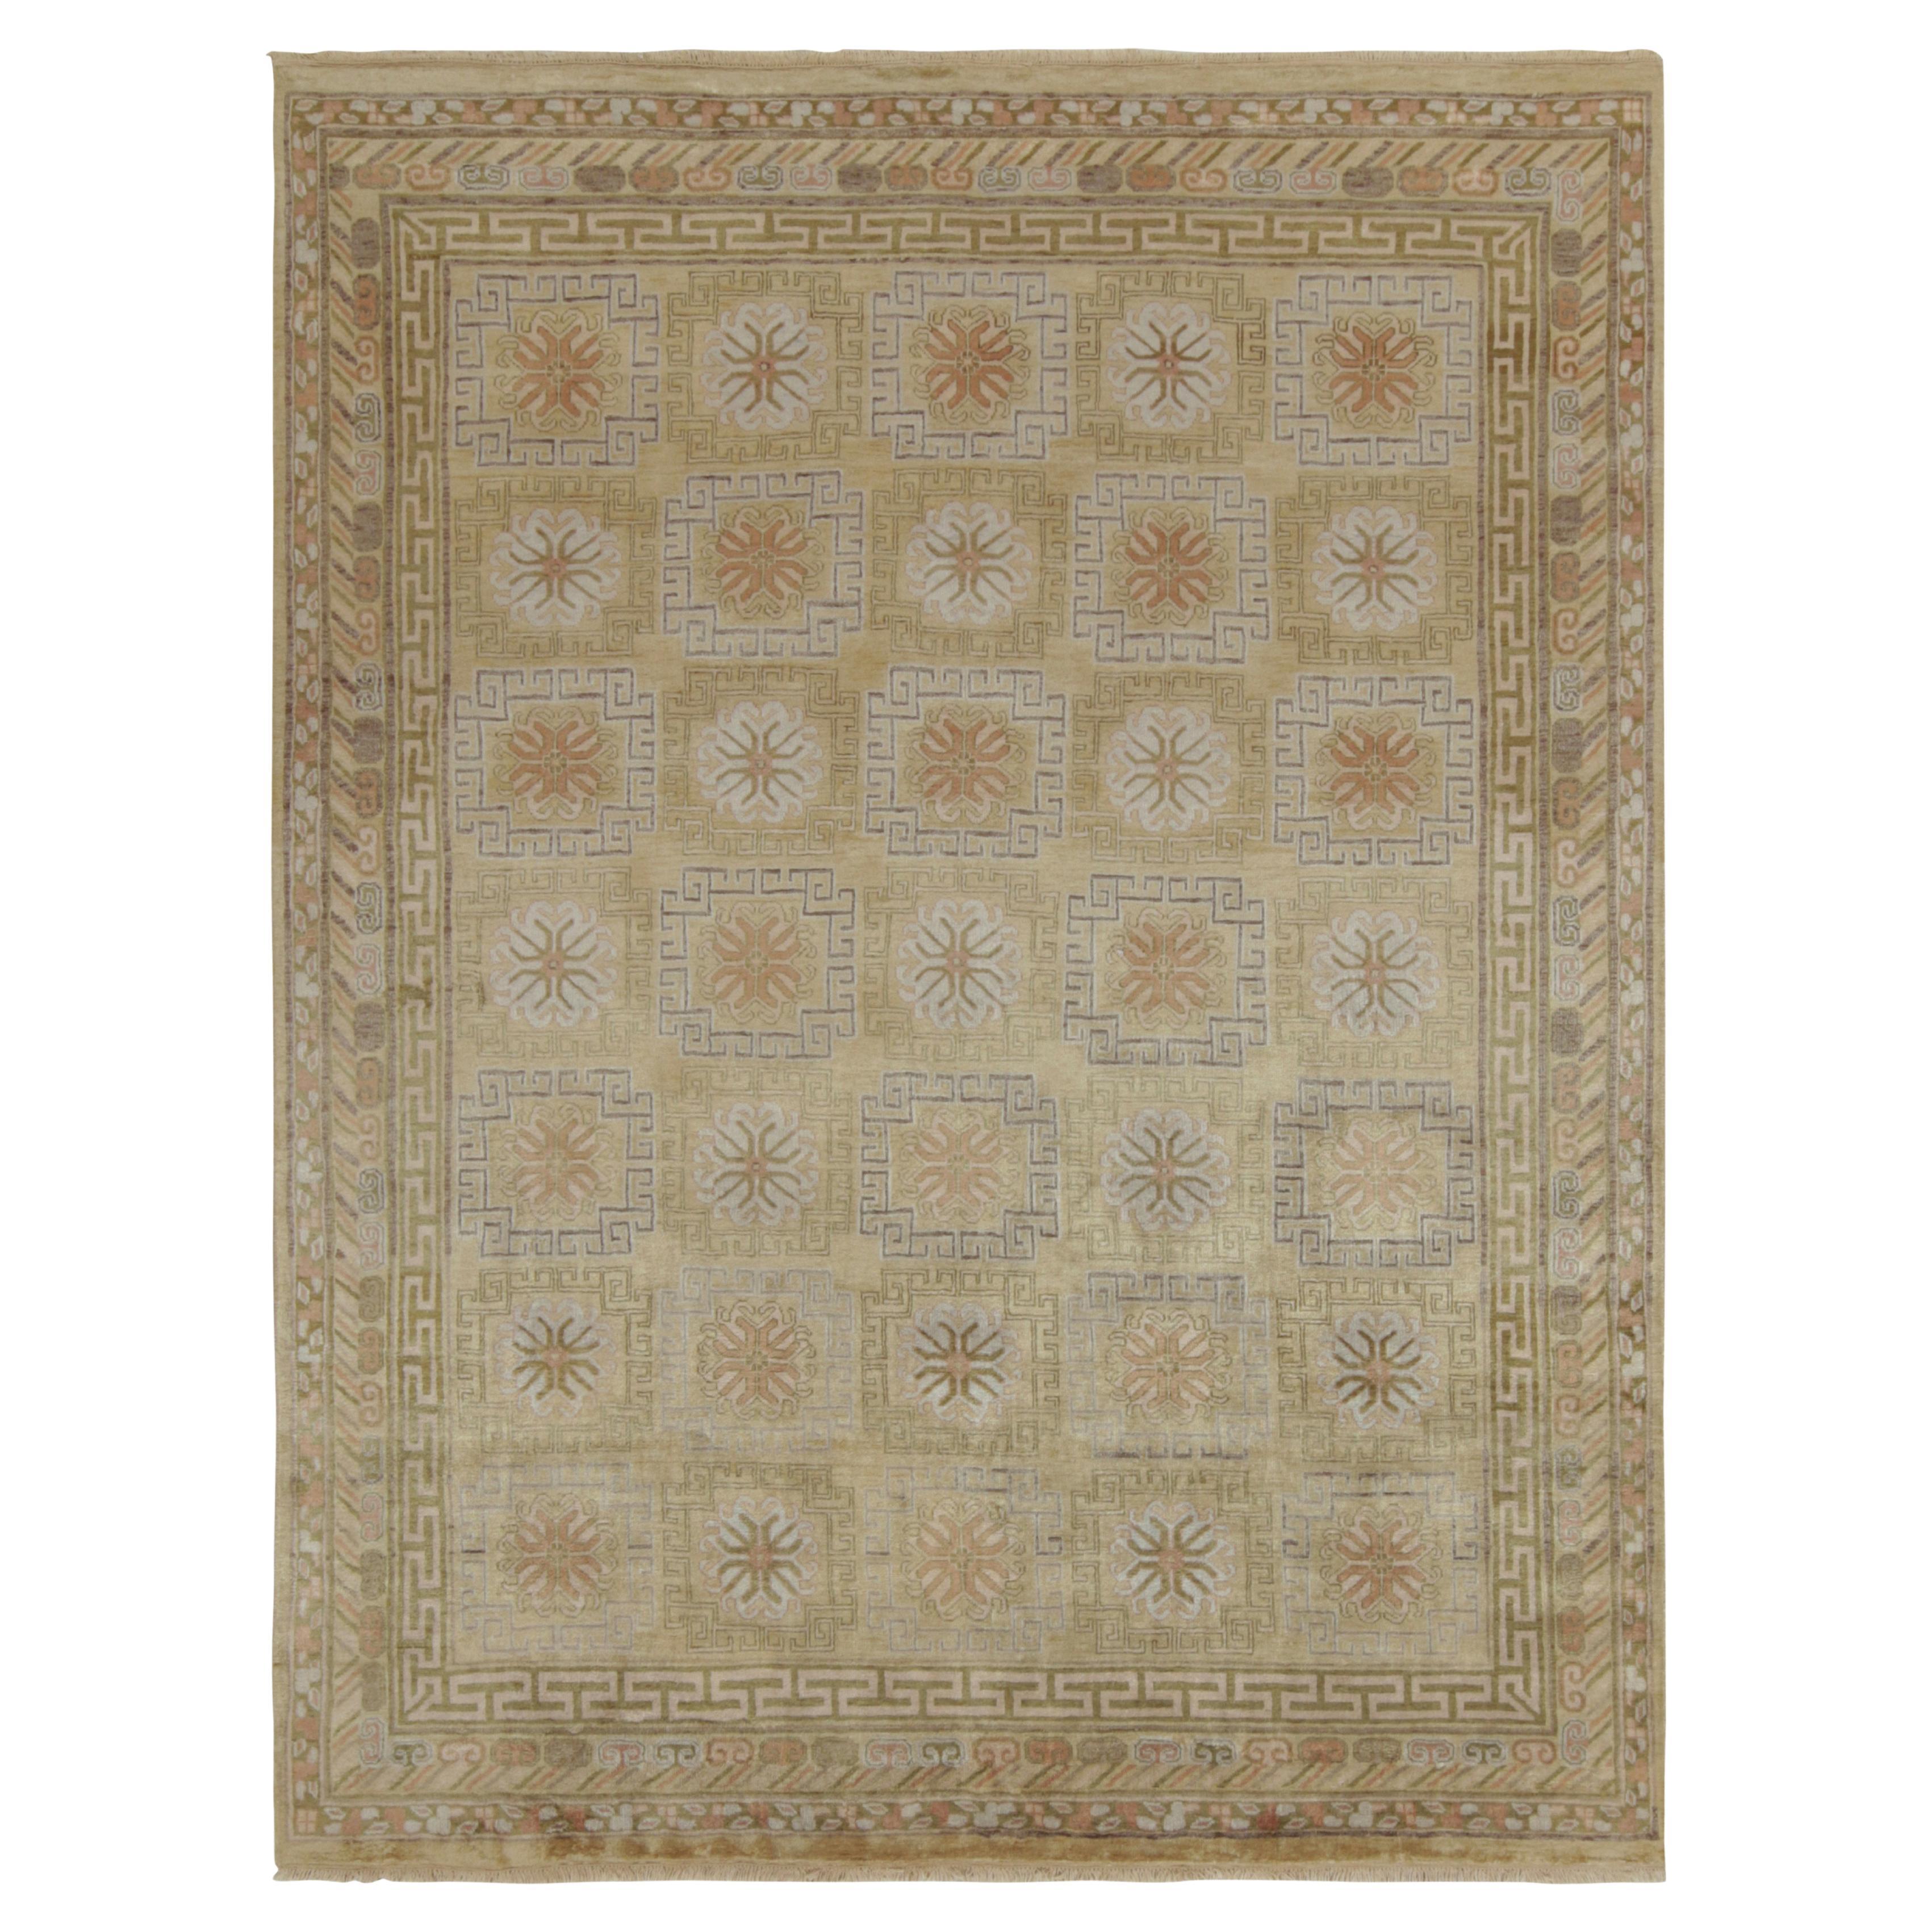 Rug & Kilim’s Antique Khotan style rug in Gold & Beige-Brown Geometric Patterns For Sale